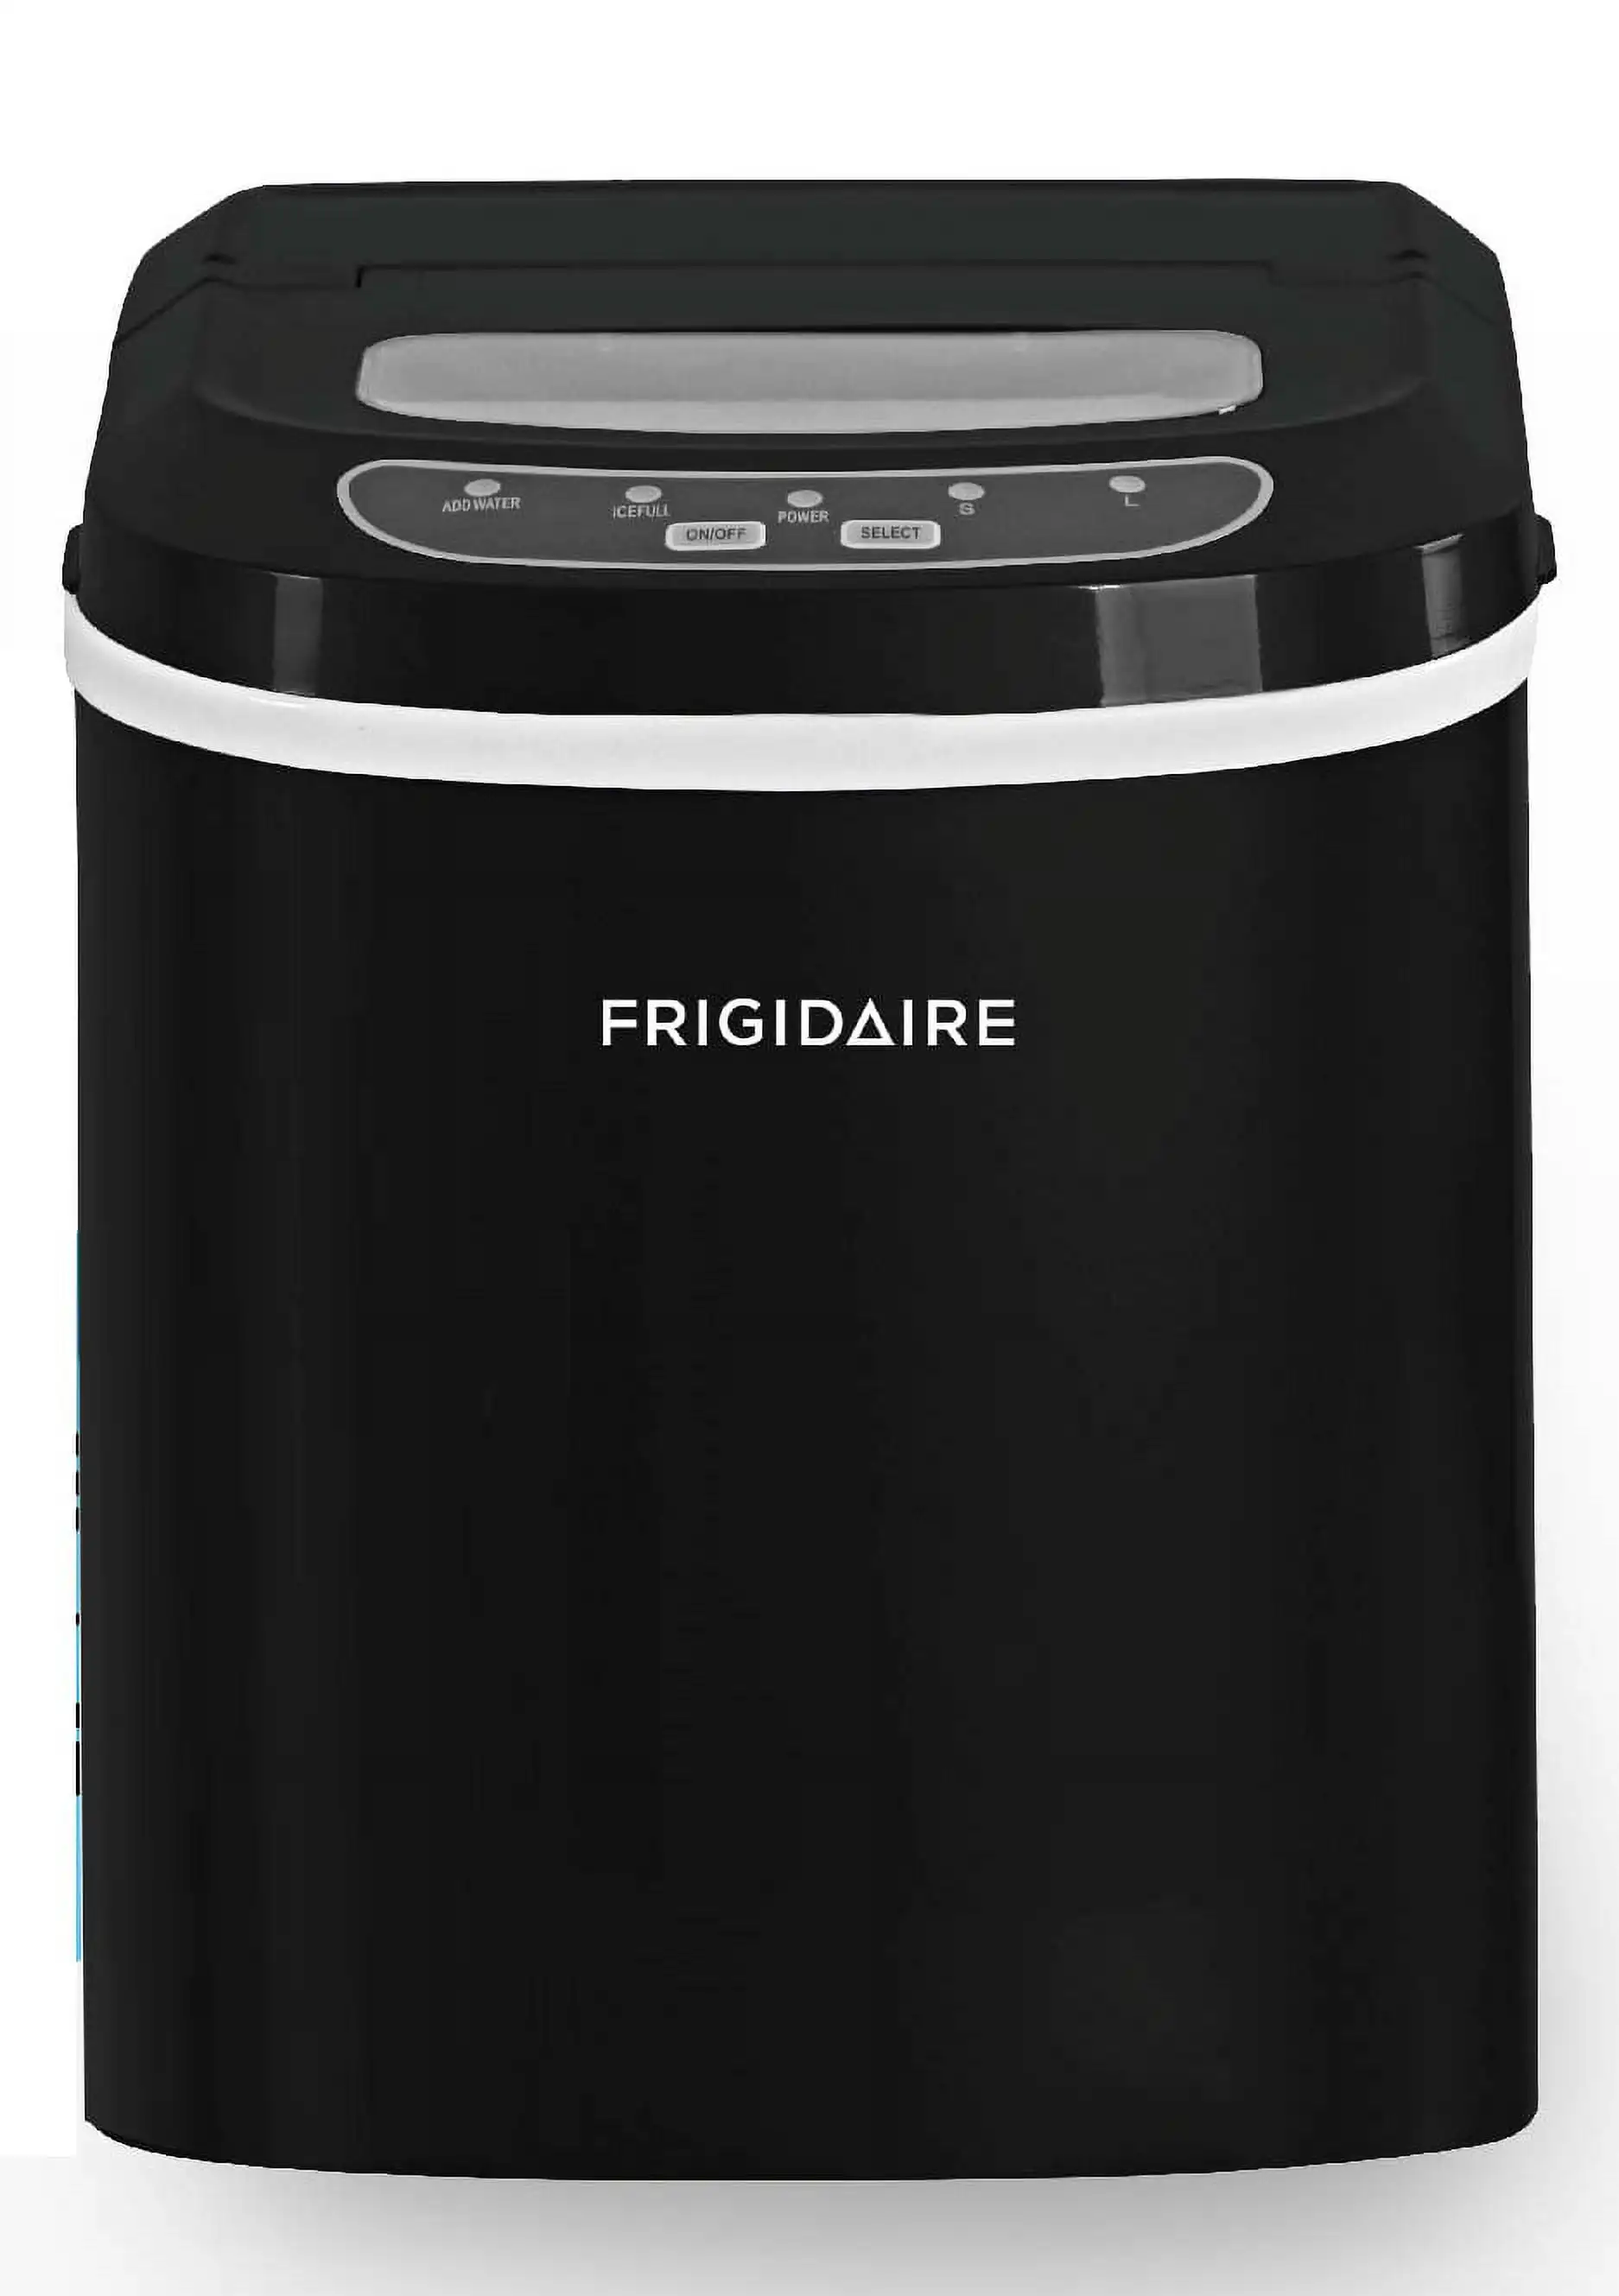 

Frigidaire 26lb. Portable Countertop Ice maker, Black, EFIC108